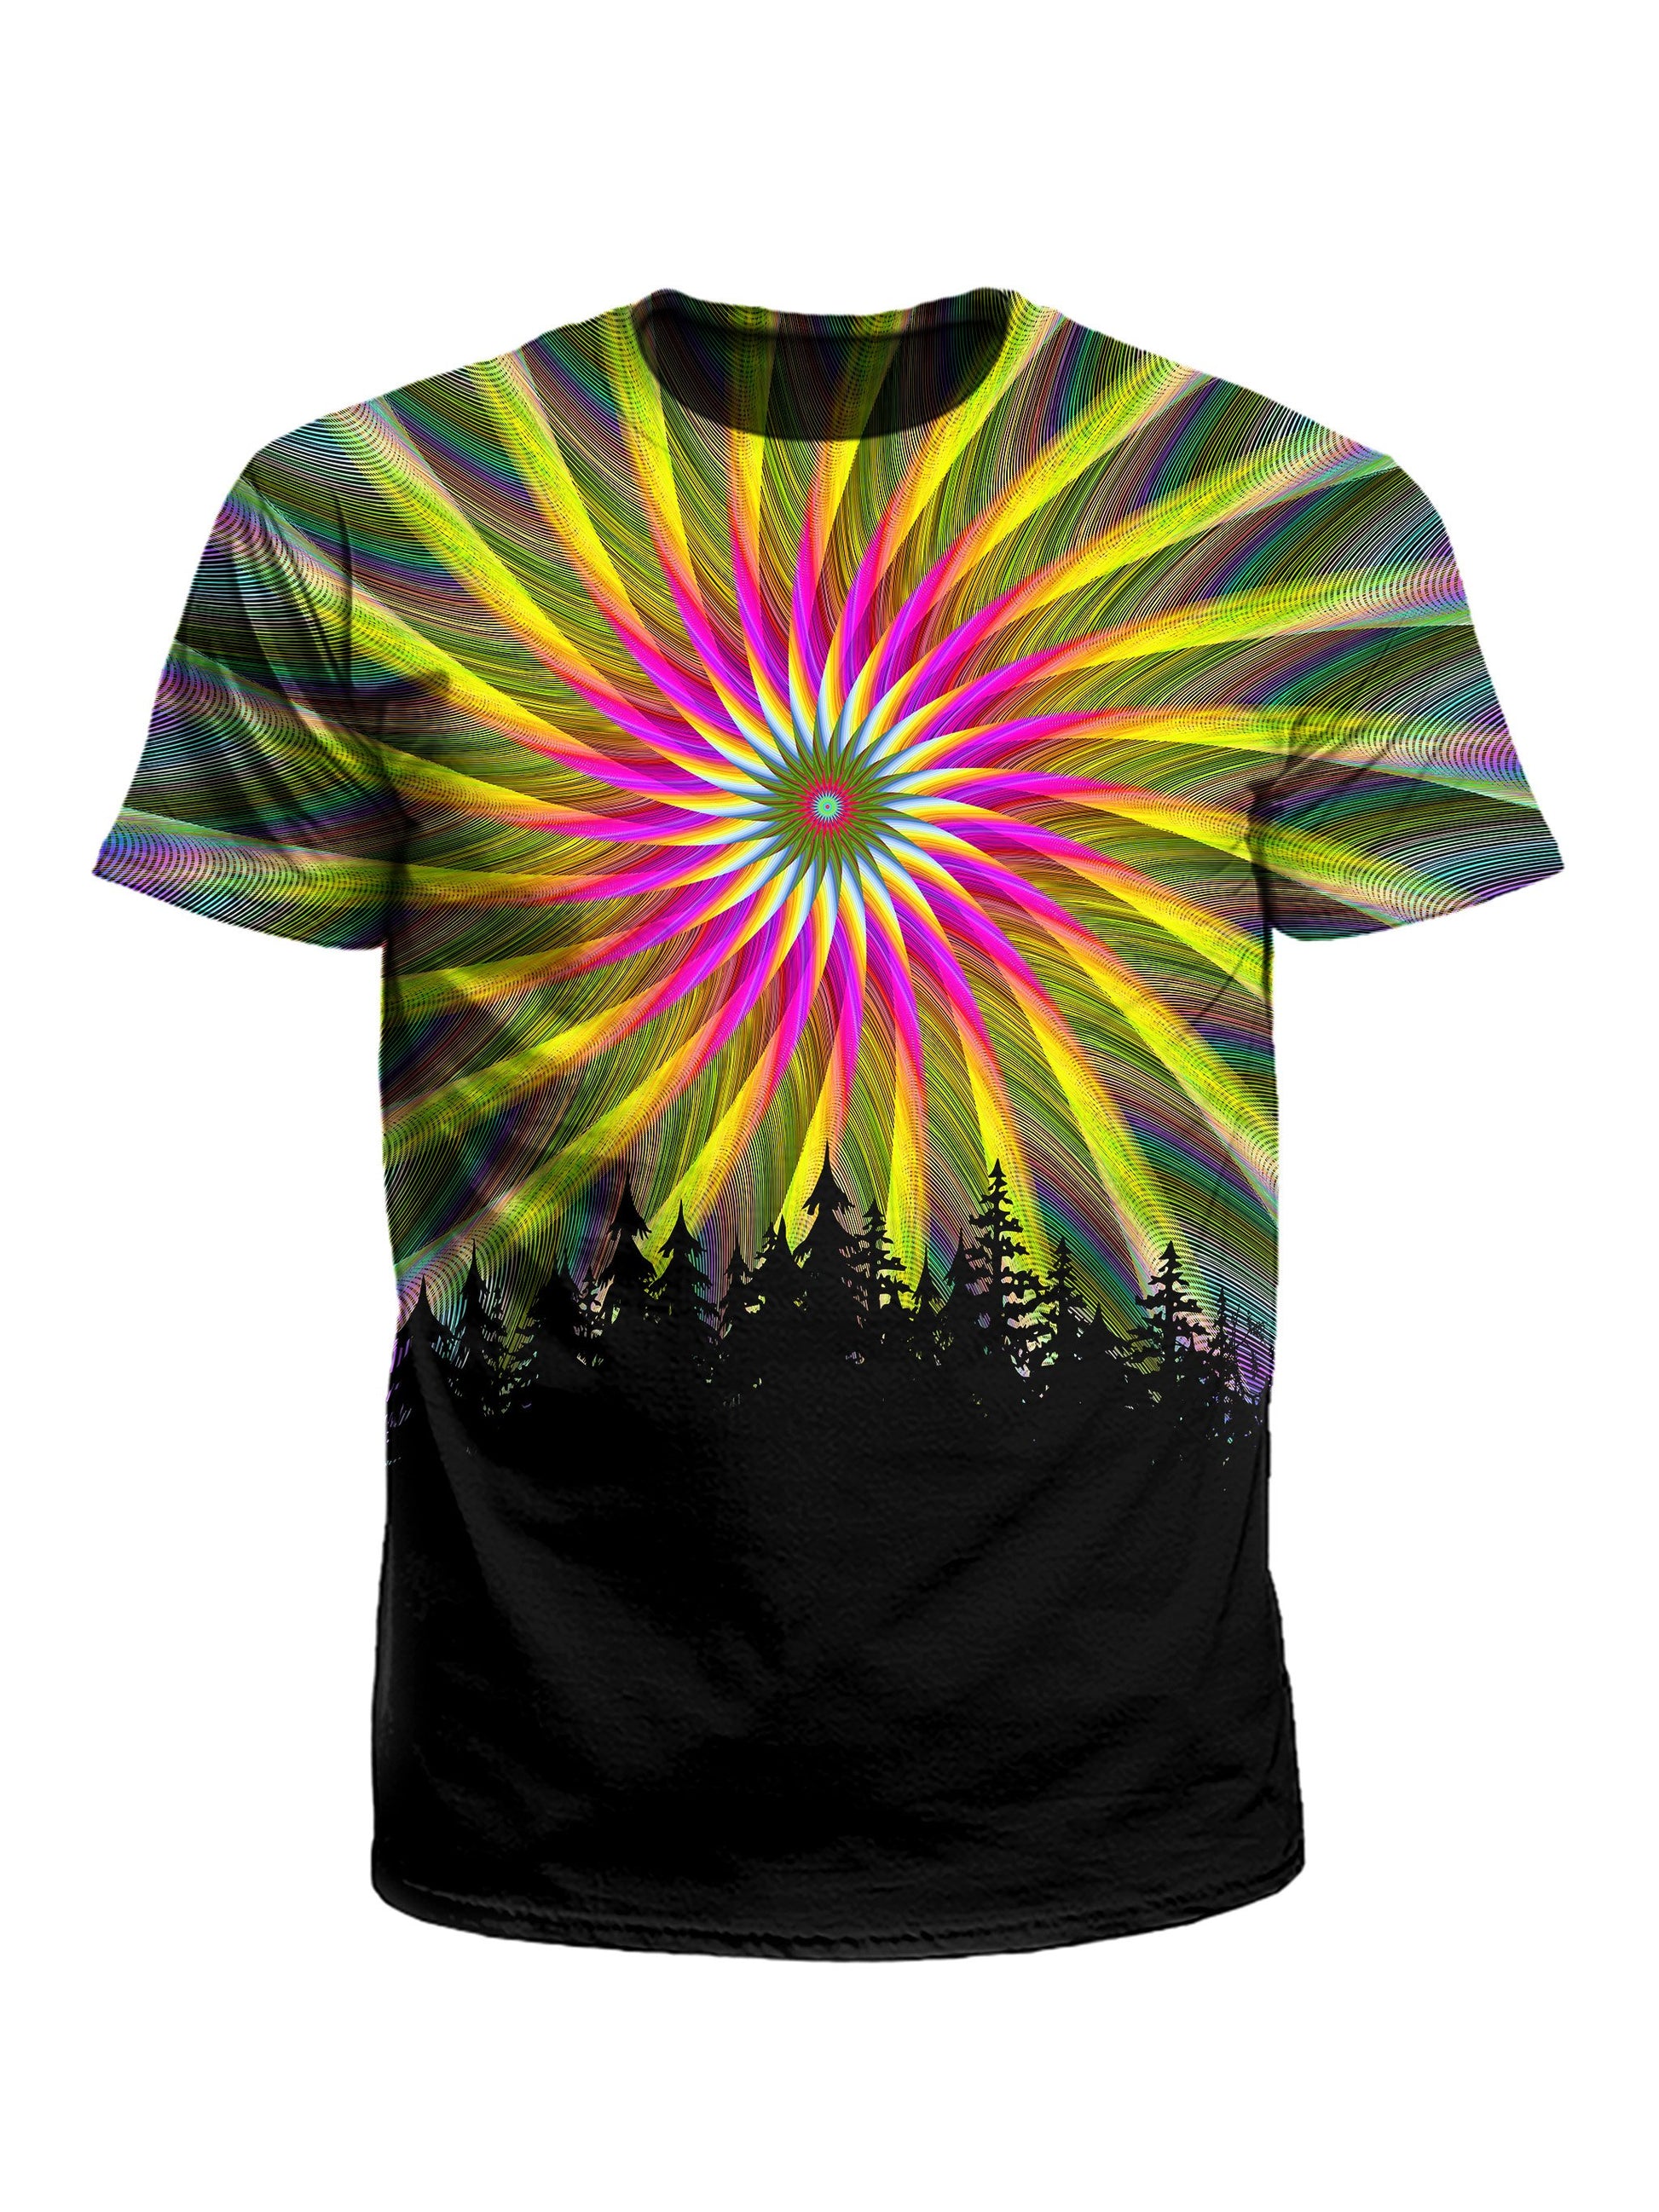 Men's rainbow & black light fractal mandala unisex t-shirt front view.